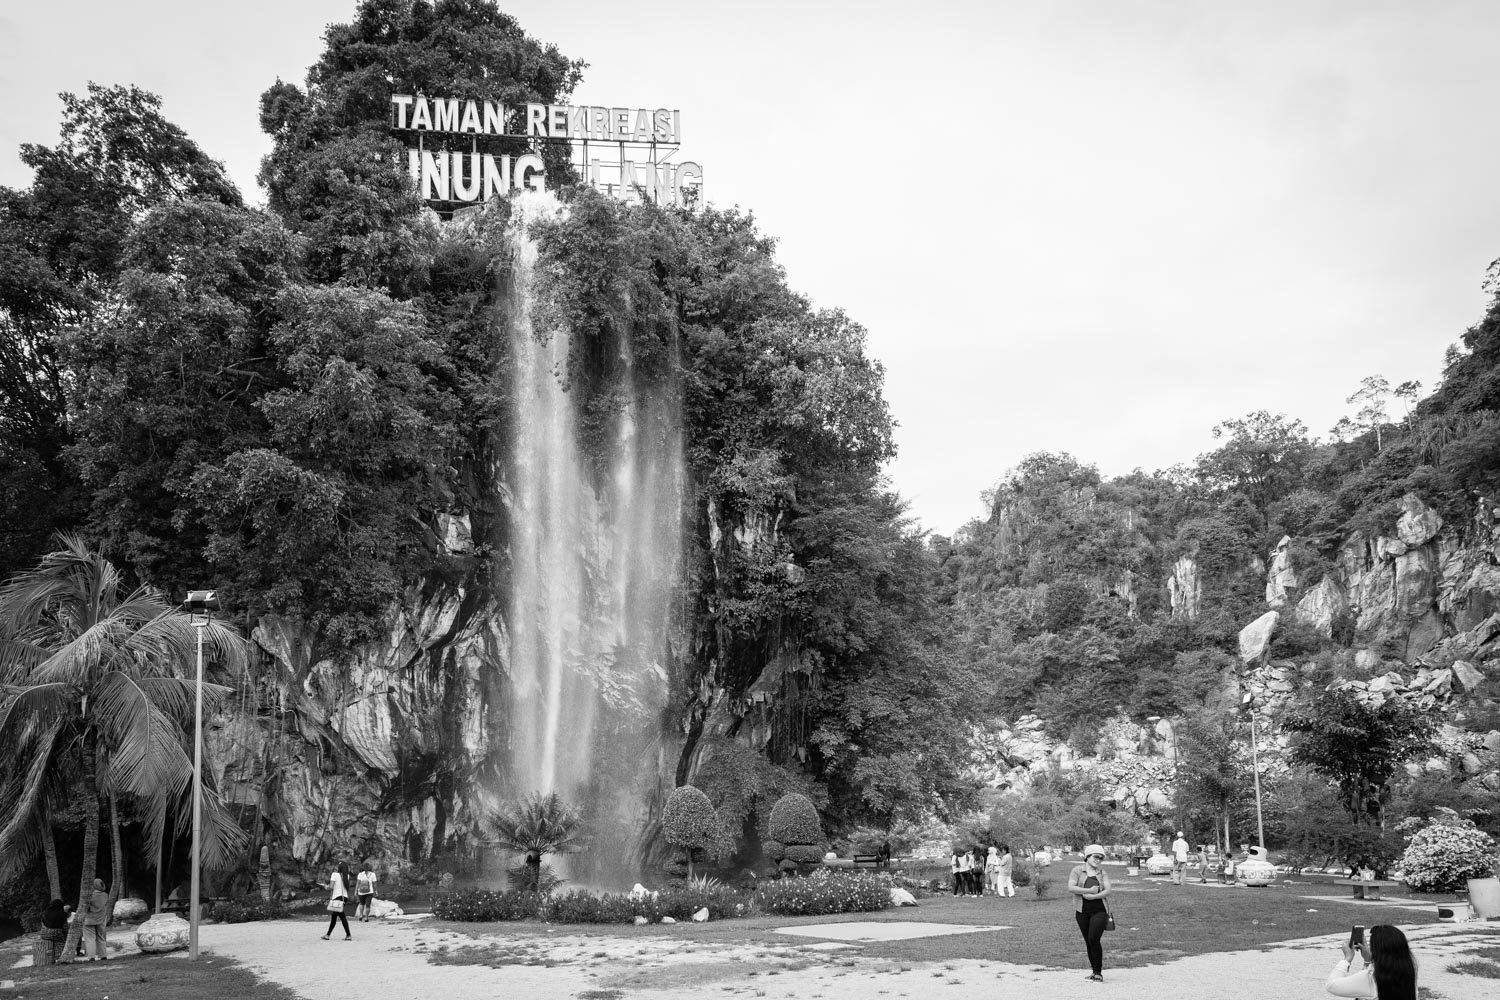 Taman Rekreasi Gunung Lang waterfall ipoh malaysia